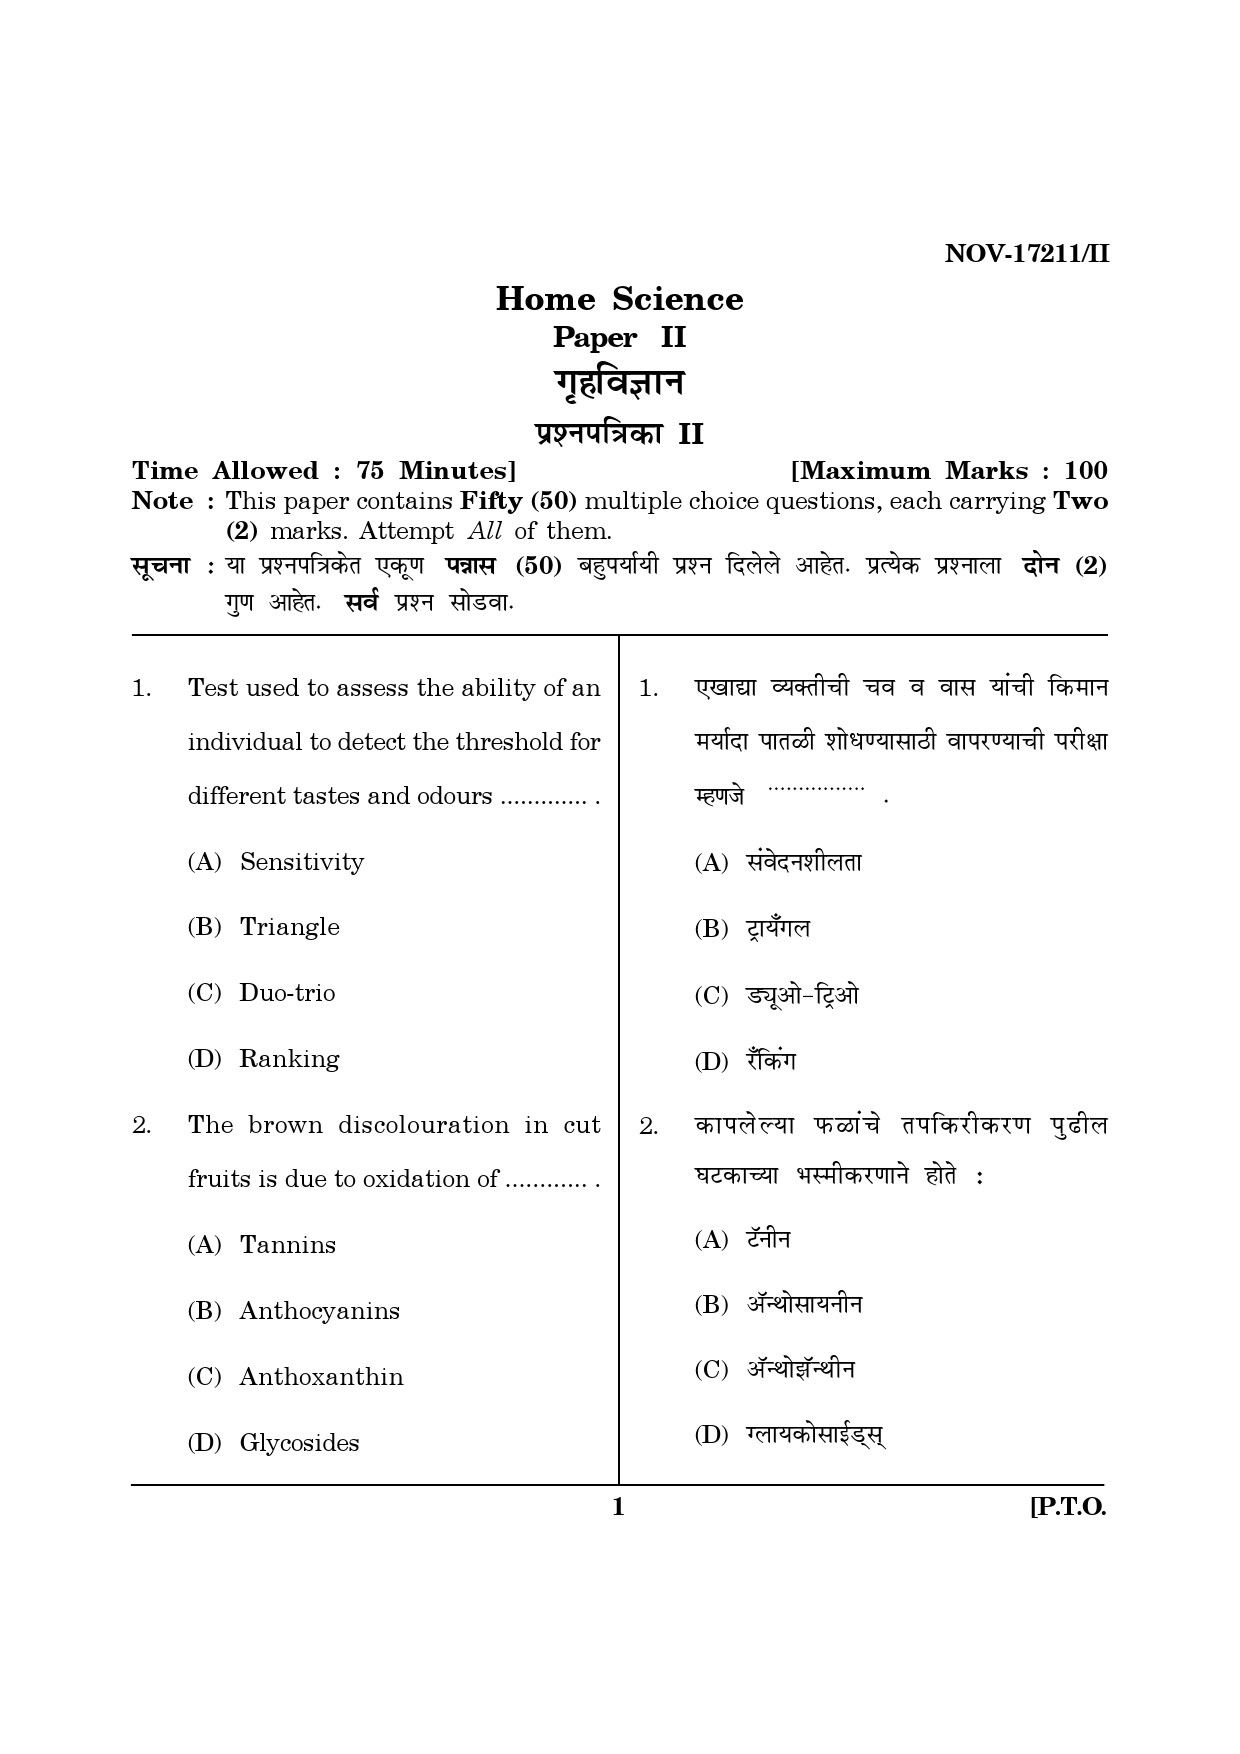 Maharashtra SET Home Science Question Paper II November 2011 1